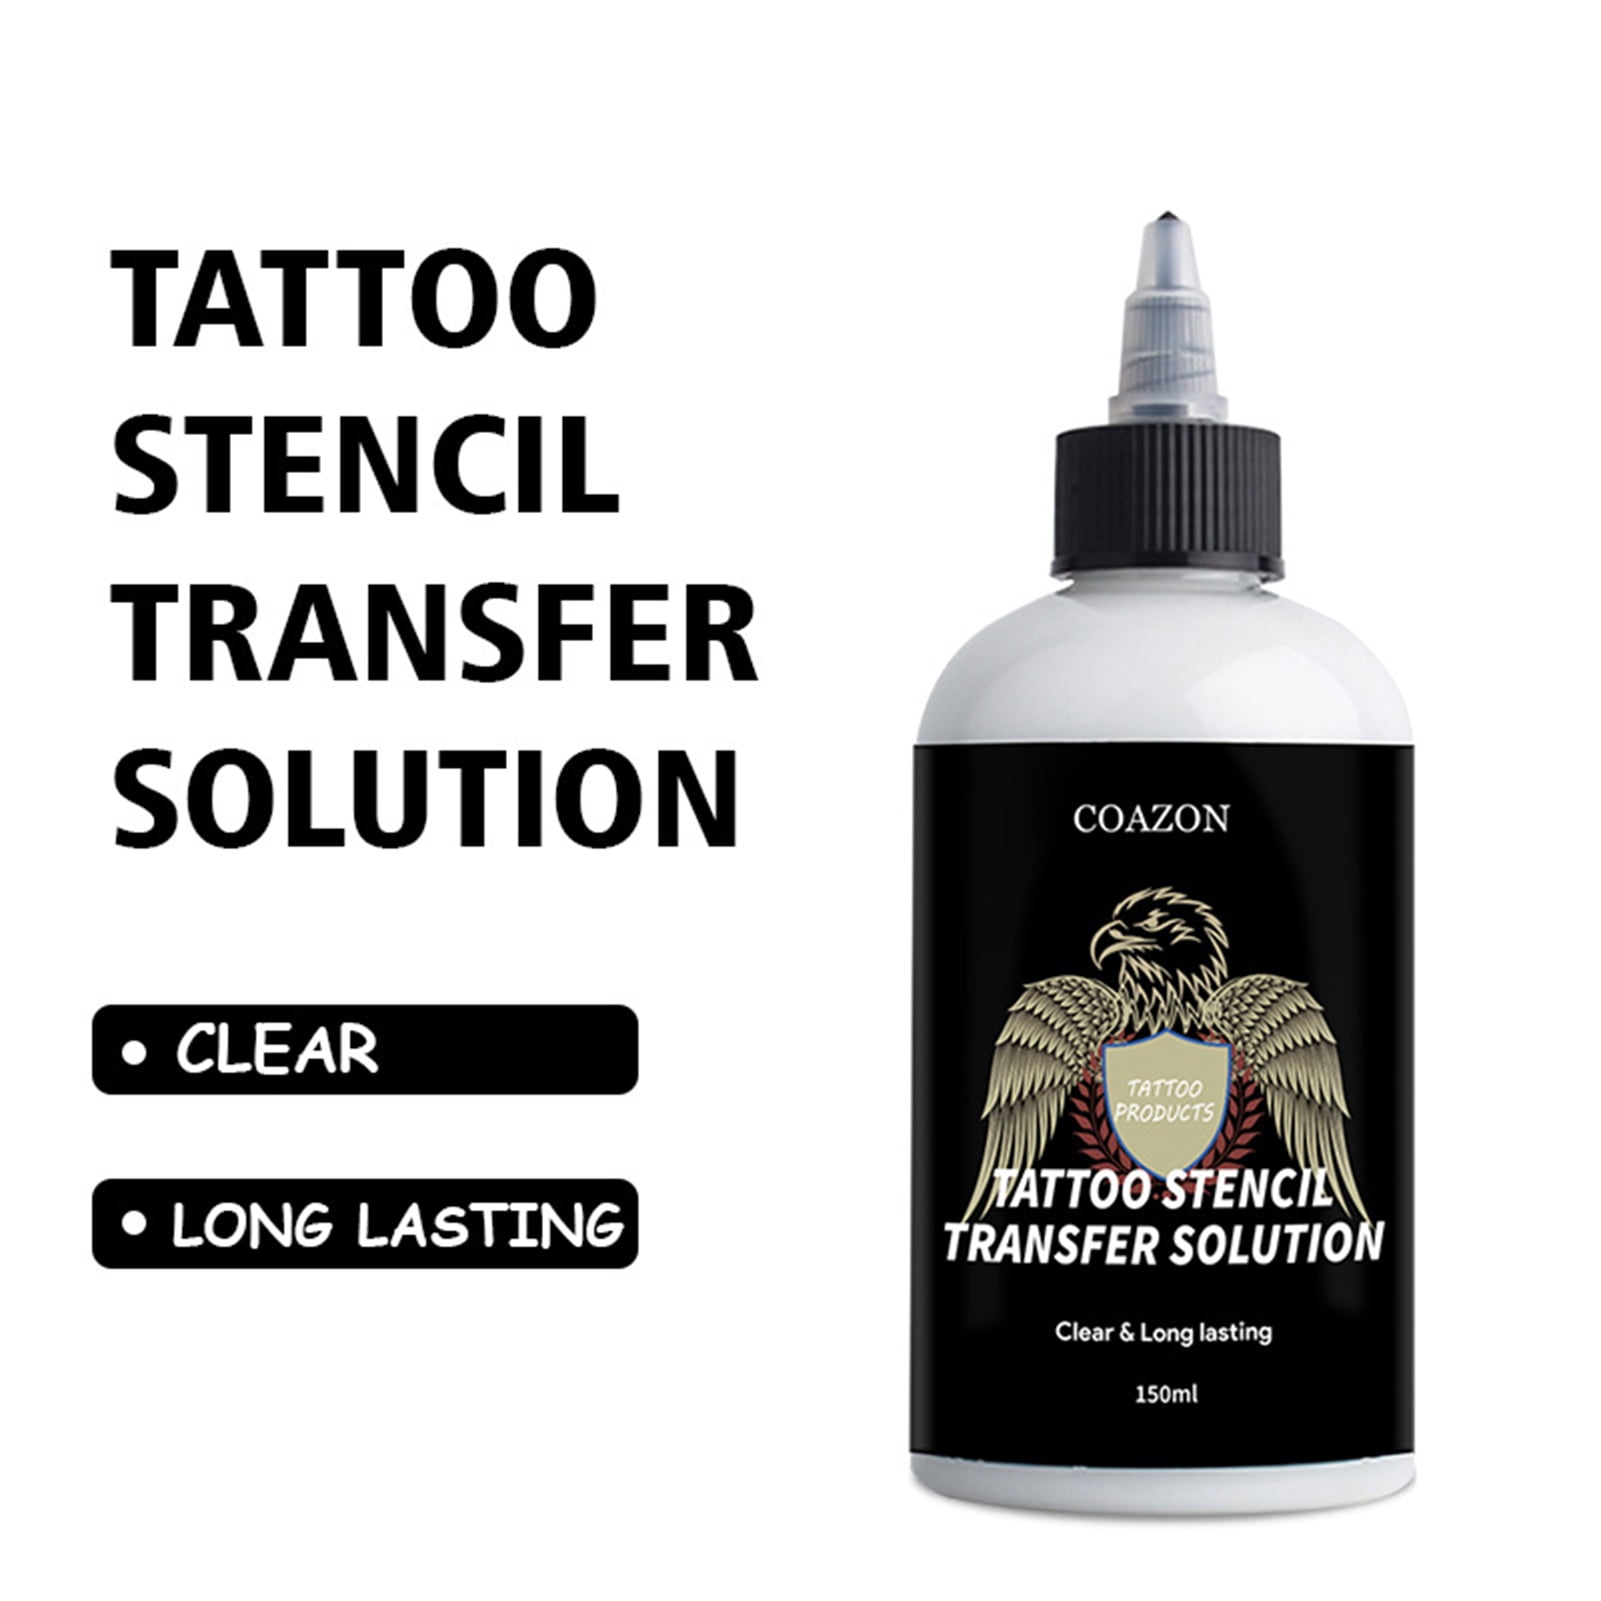 Essential Values Tattoo Transfer Gel Solution (8 fl oz) Tattoo Stencil Gel for Sharp, Dark & Clean Stencils - Tattoo Transfer Liquid Designed to Last All Day